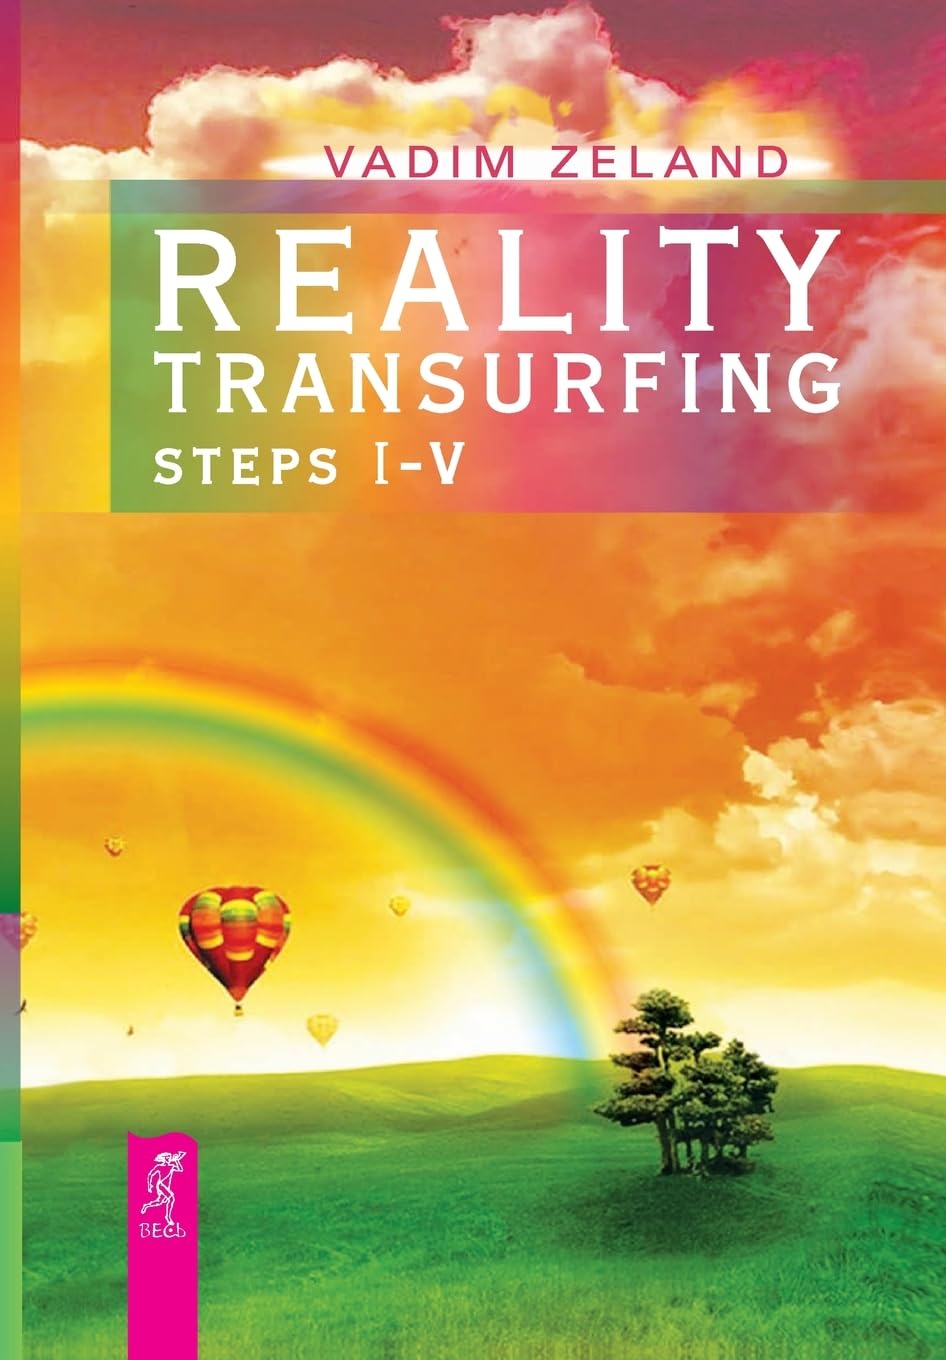 Reality Transurfing: Steps 1-5 Book by Vadim Zeland